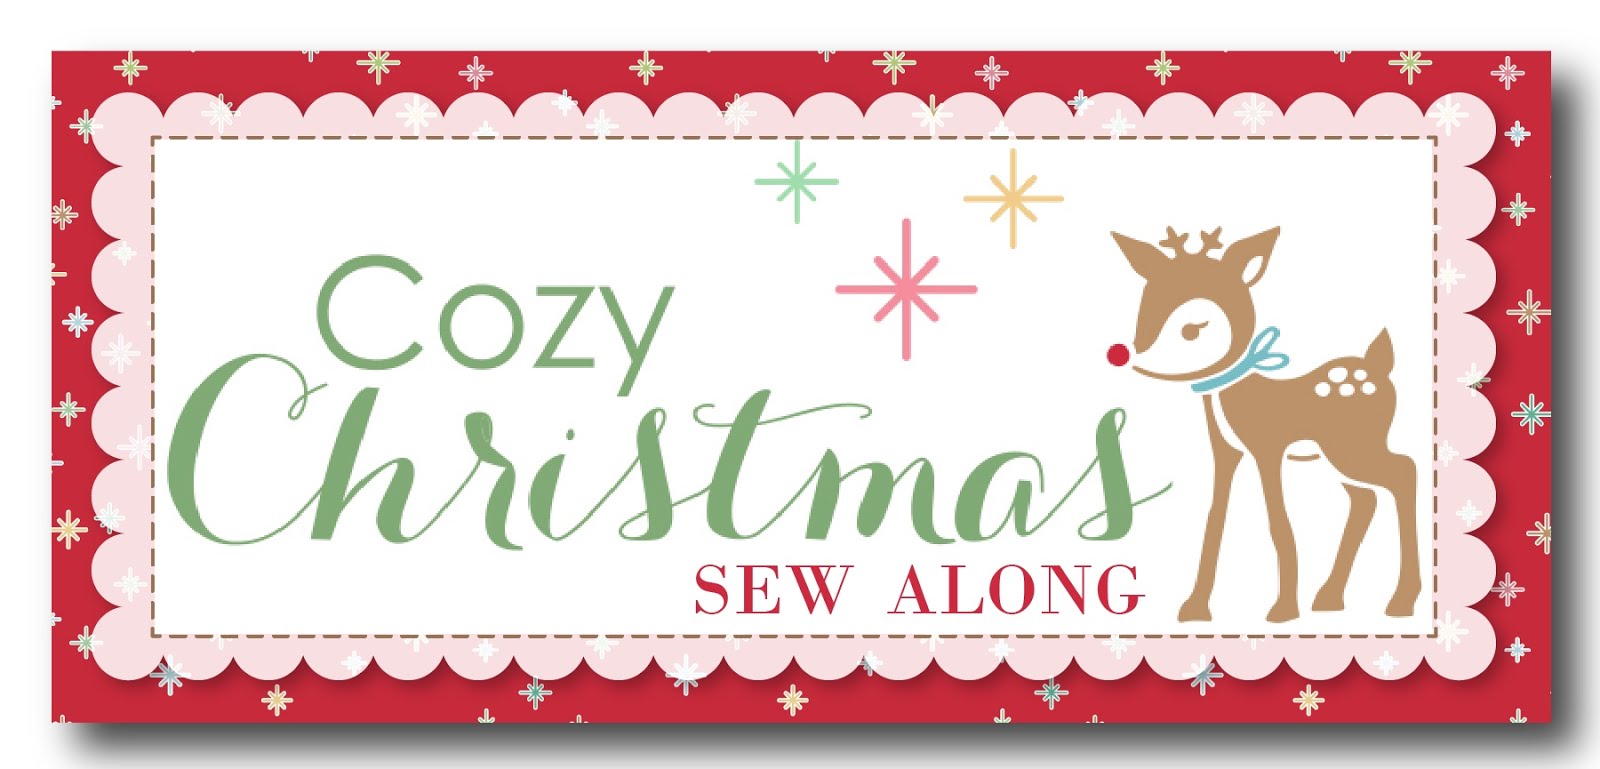 Cozy Christmas Sew Along!!!